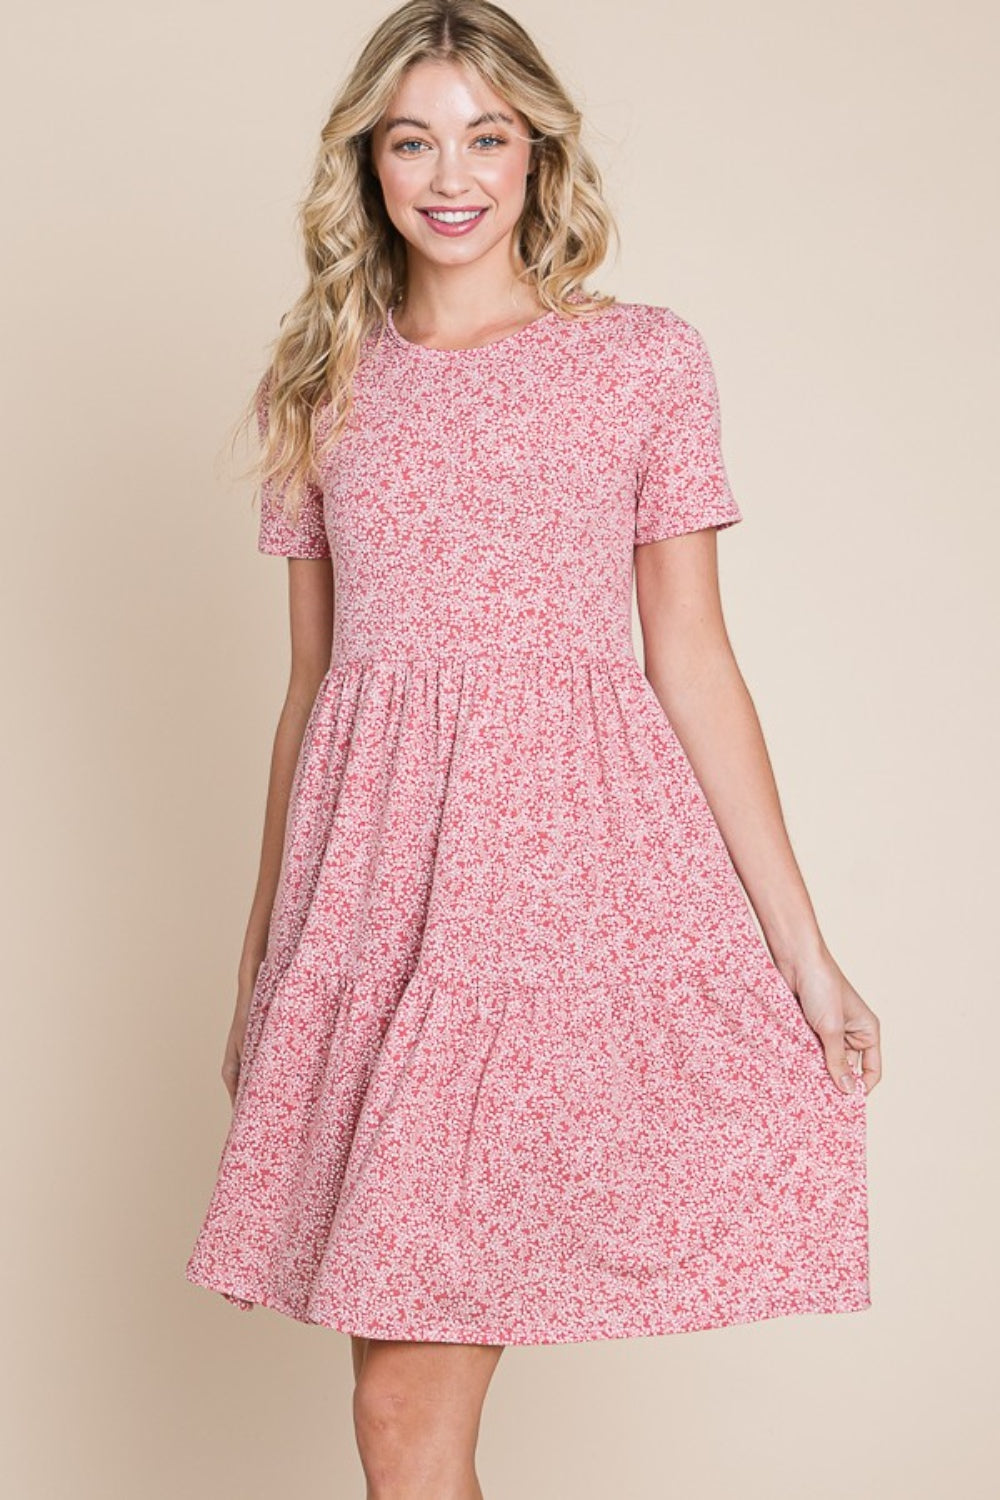 KESLEY Pink Printed Short Sleeve Mini Dress Casual Women's Clothing